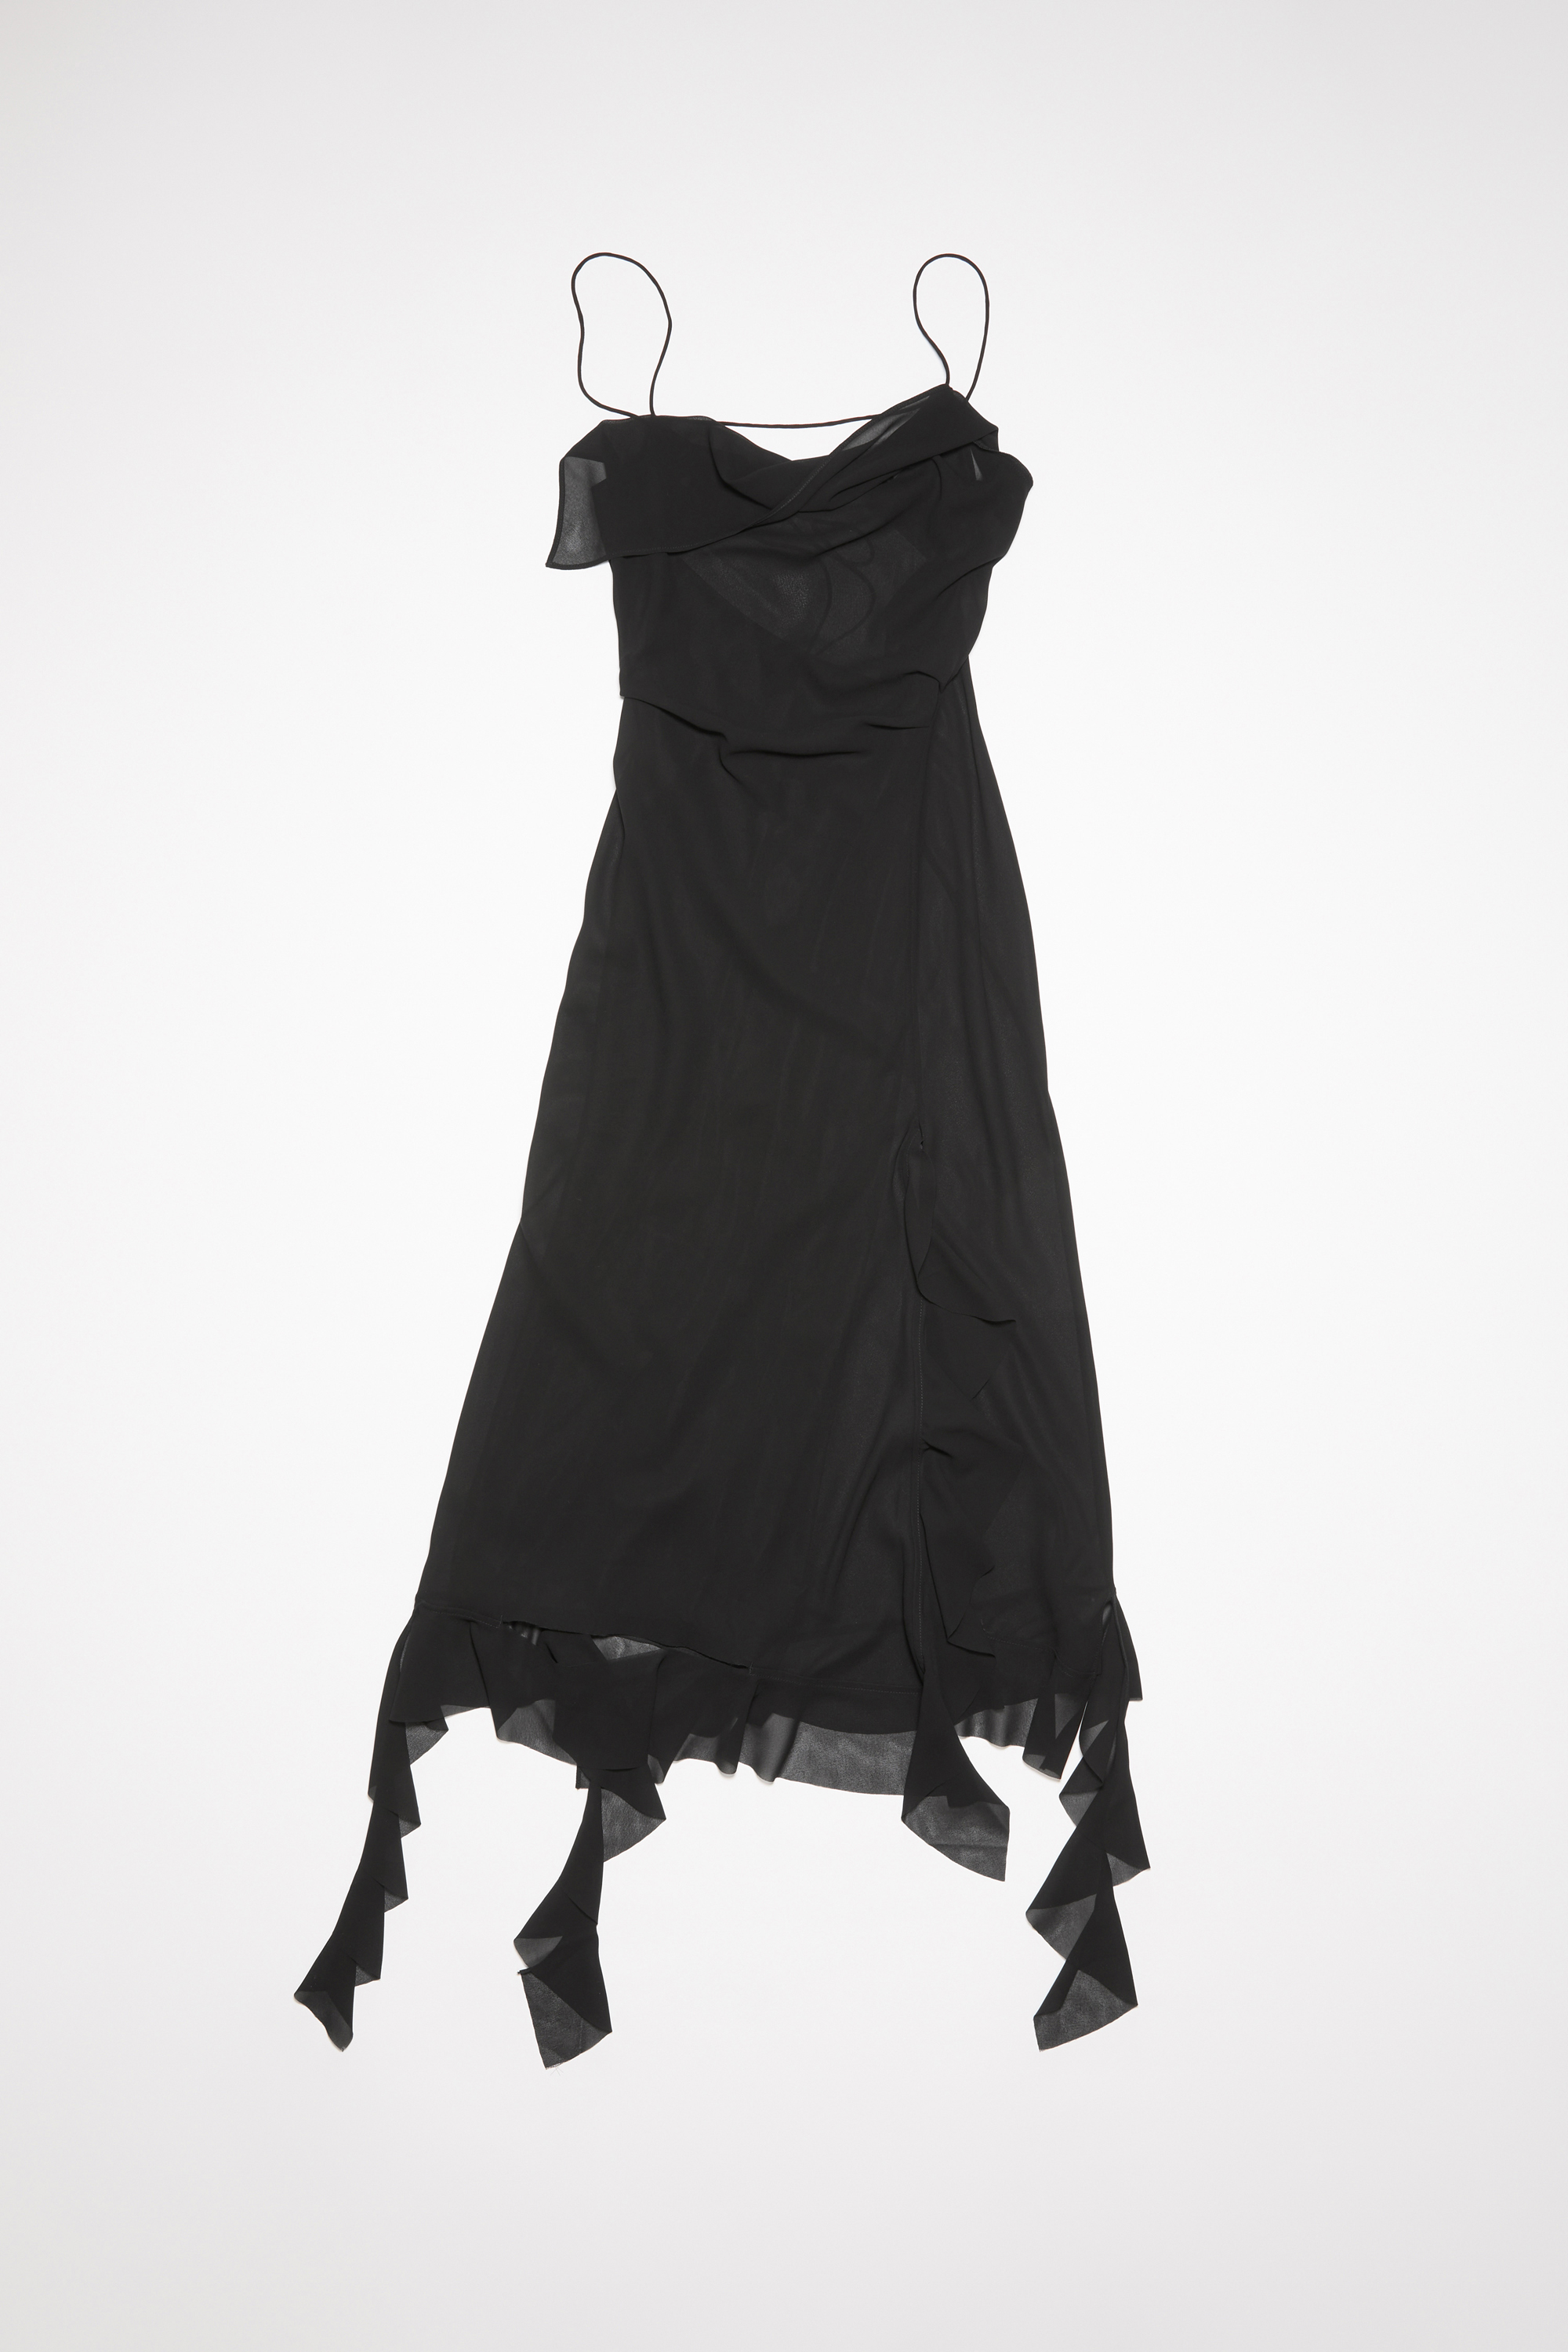 Acne Studios Ruffle Strap Dress In Black